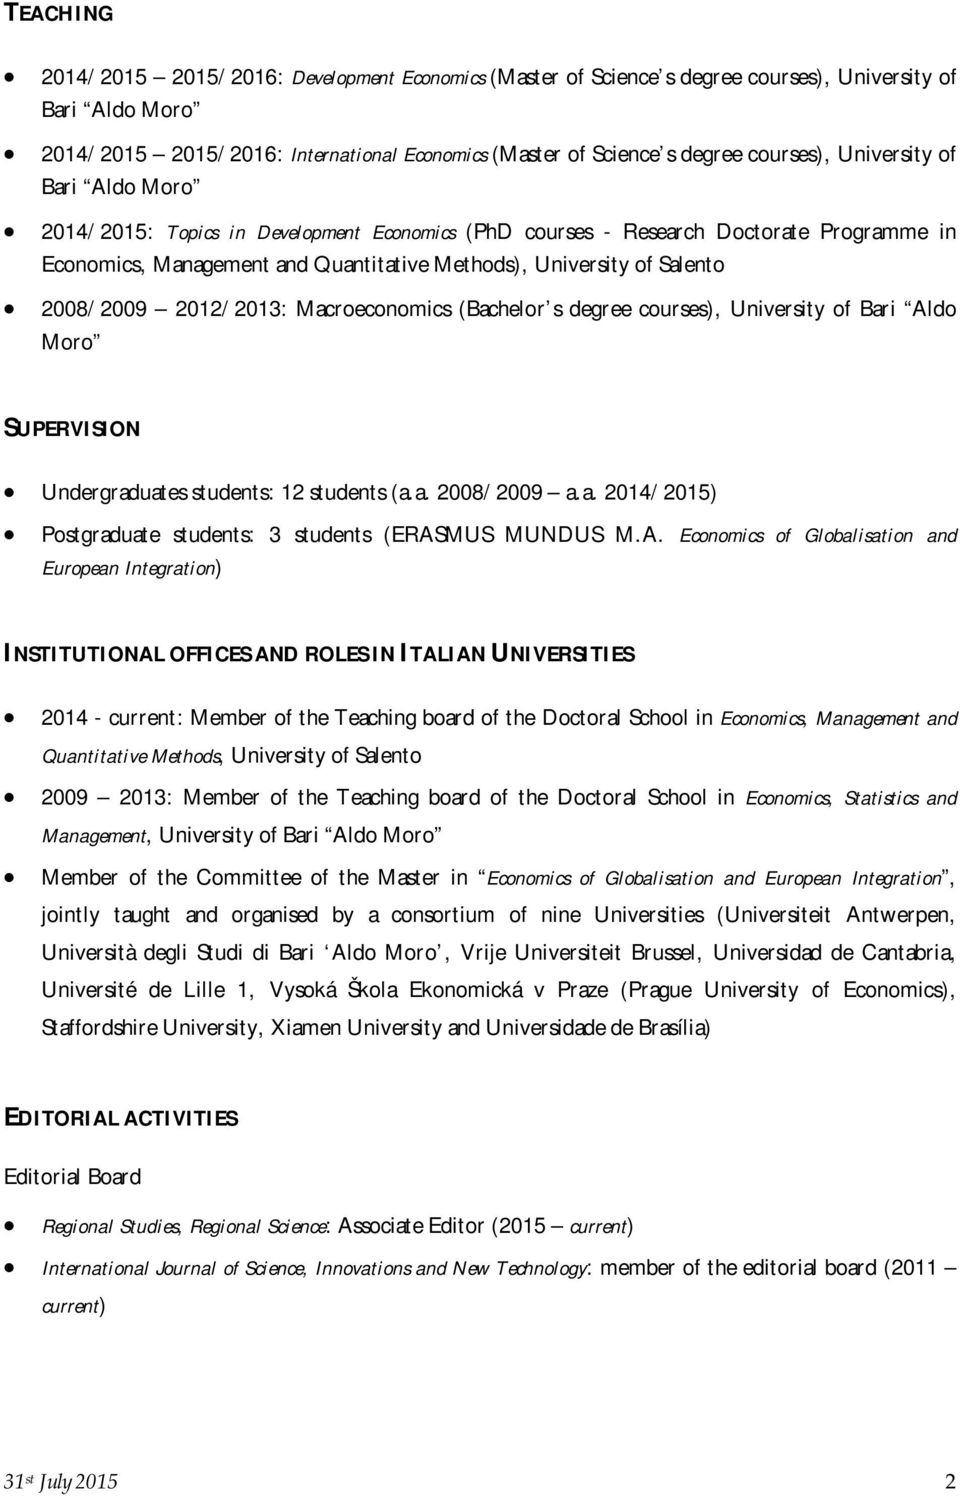 2008/2009 2012/2013: Macroeconomics (Bachelor s degree courses), University of Bari Aldo Moro SUPERVISION Undergraduates students: 12 students (a.a. 2008/2009 a.a. 2014/2015) Postgraduate students: 3 students (ERASMUS MUNDUS M.